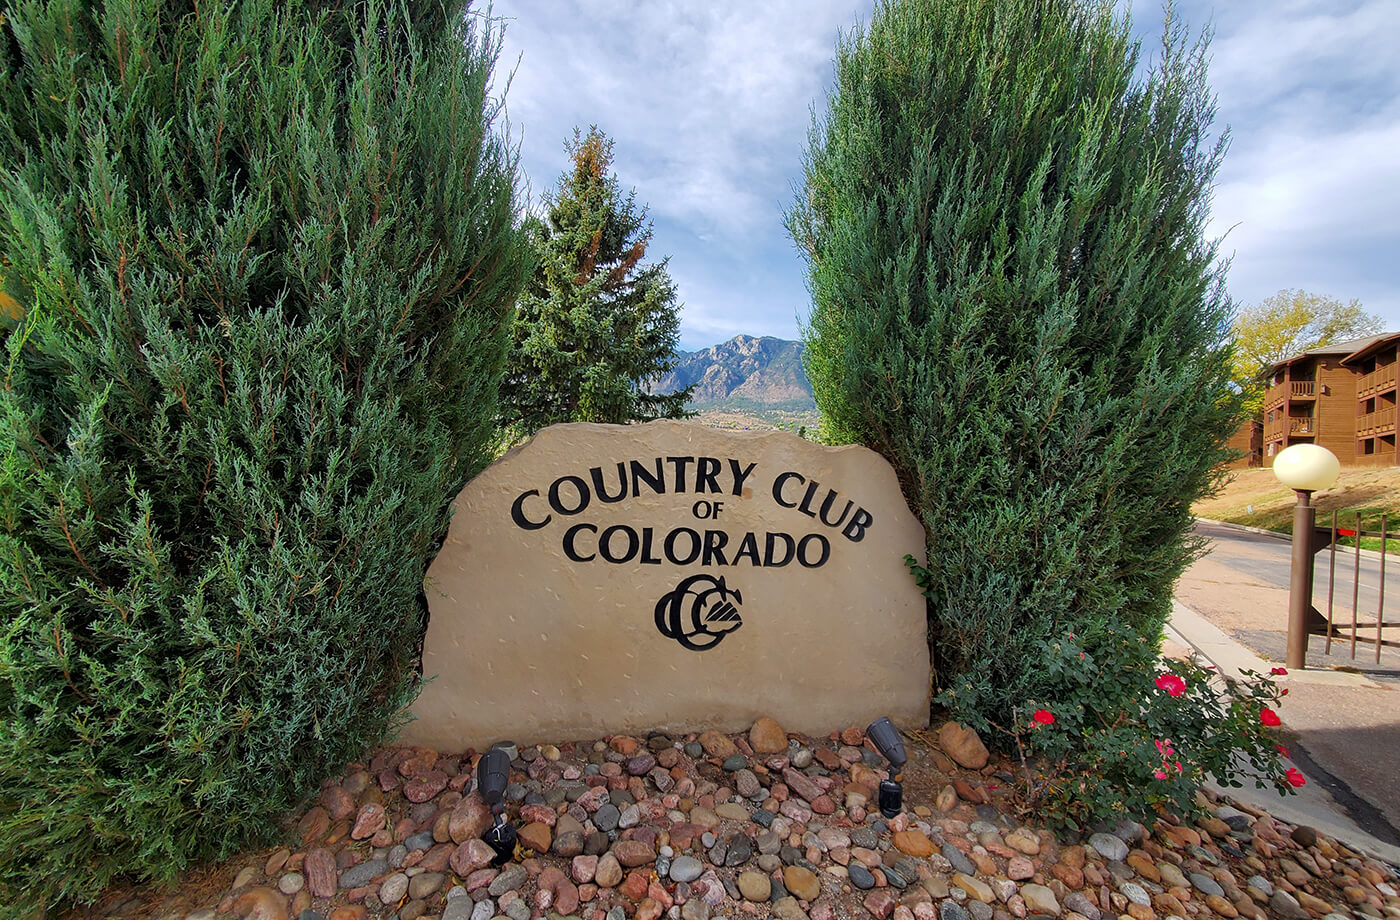 Stone sign for CC of Colorado